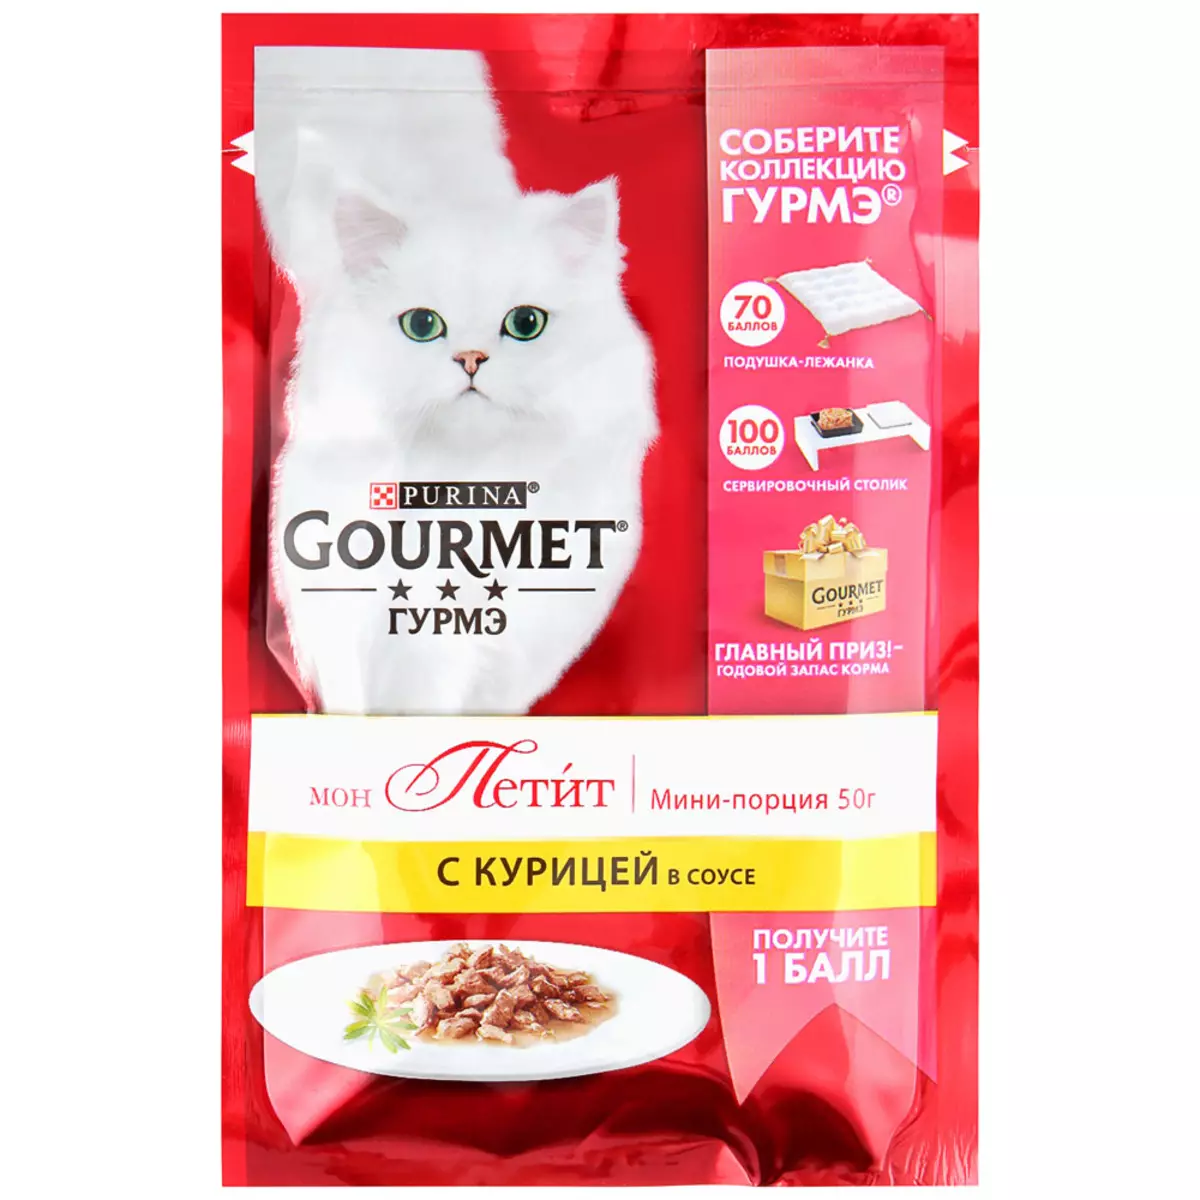 Gourmet: Feed Cat dan Purina Kittens, Wet Pates dan Feline Feline lain, komposisi mereka, ulasan 22711_37